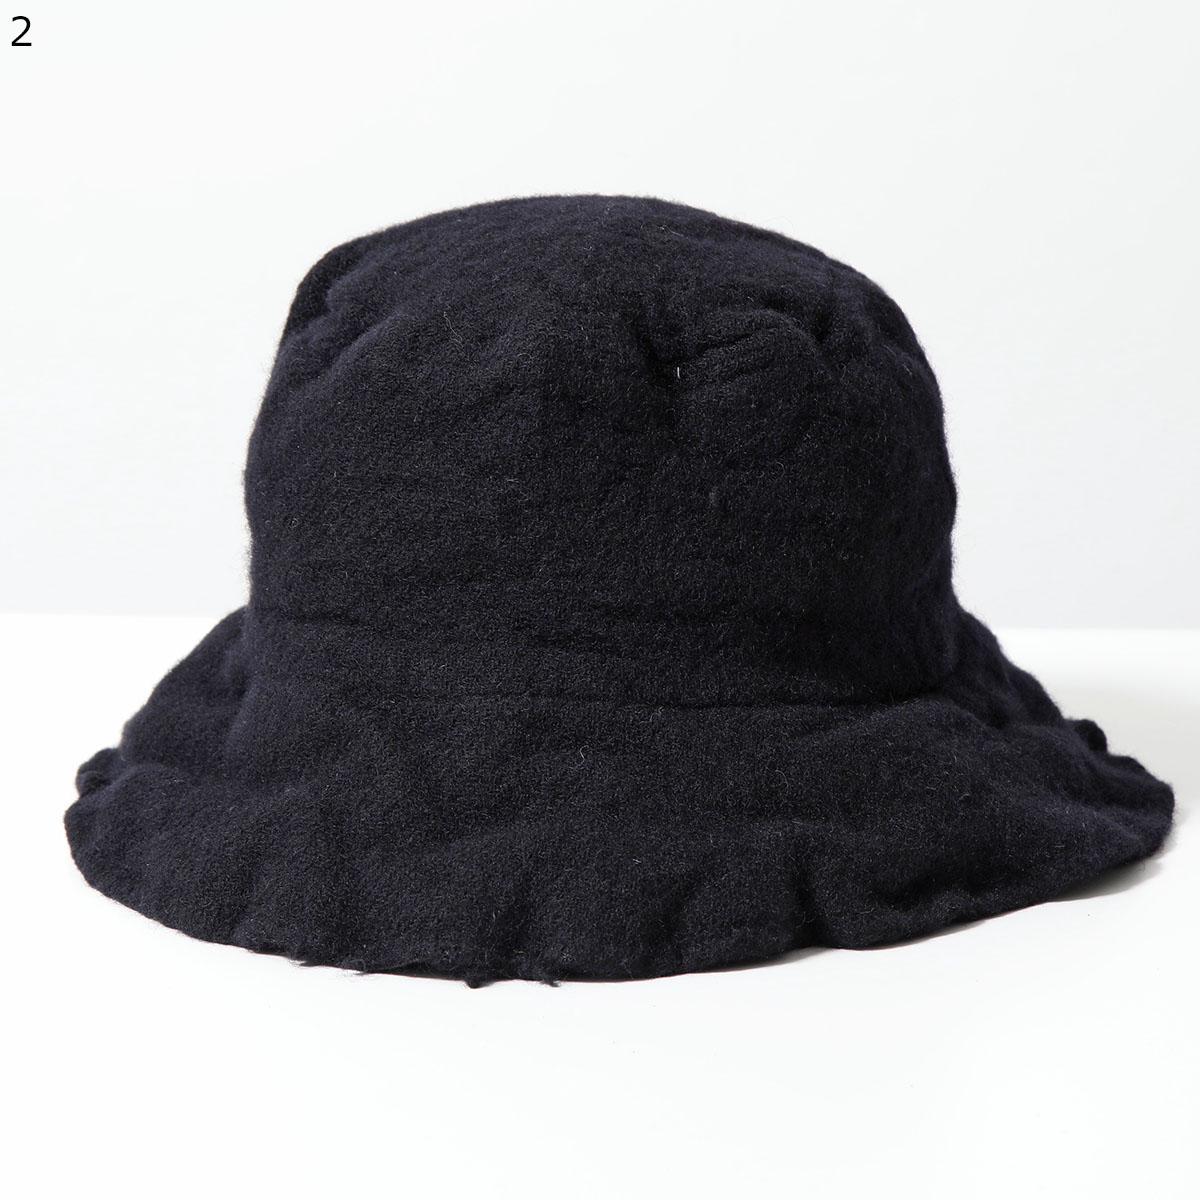 COMME des GARCONS SHIRT コムデギャルソン シャツ バケットハット FL K601 W23 メンズ ウール×ナイロン 帽子  カラー2色